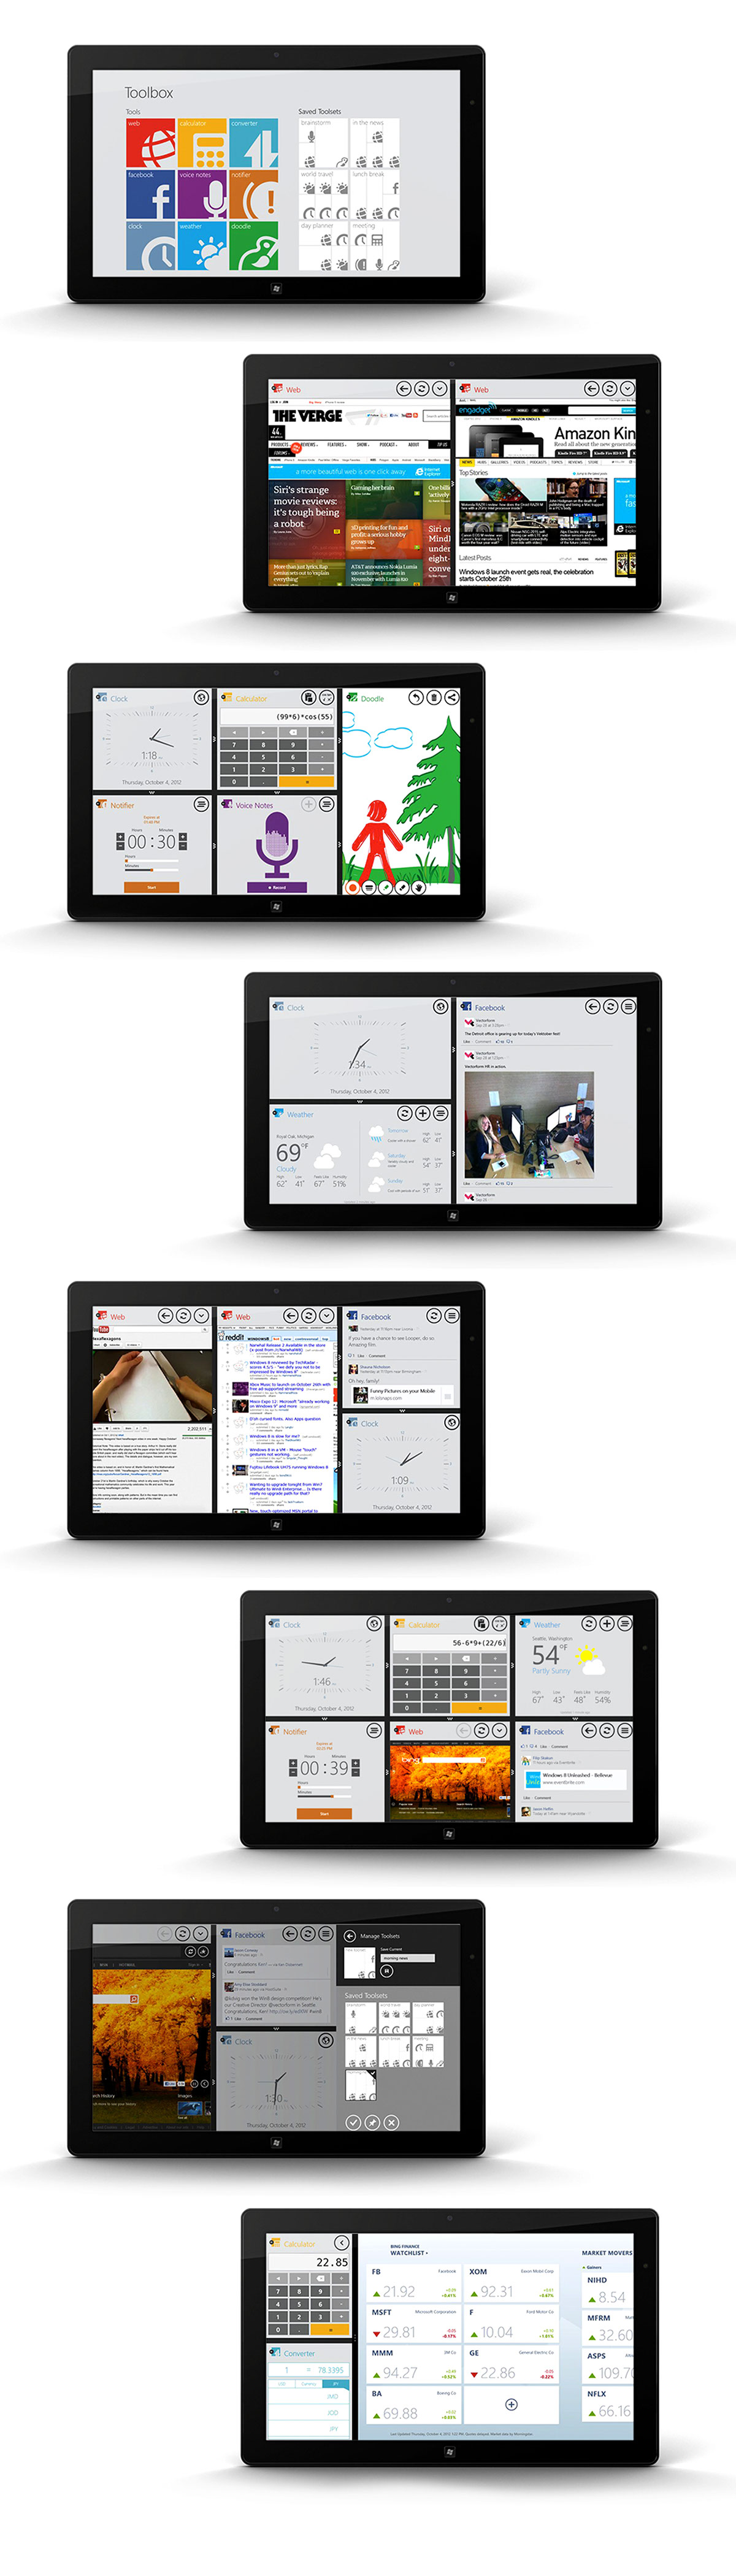 Toolbox windows8 app vectorform elsida konakciu appstore kevin foreman design Microsoft tablet interactive design Windows 8